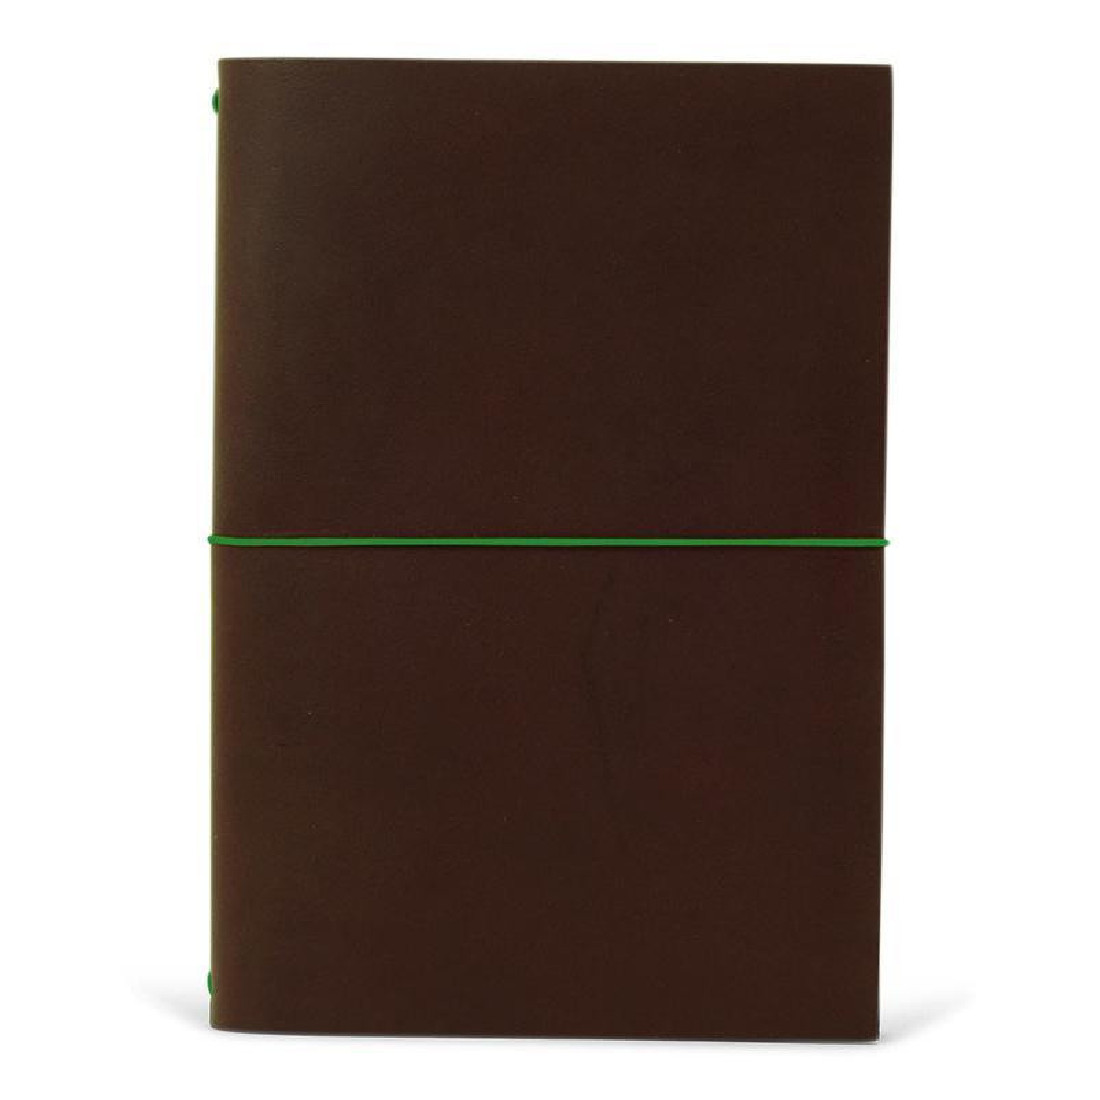 Paper Republic grand voyageur [xl] chestnut leather journal